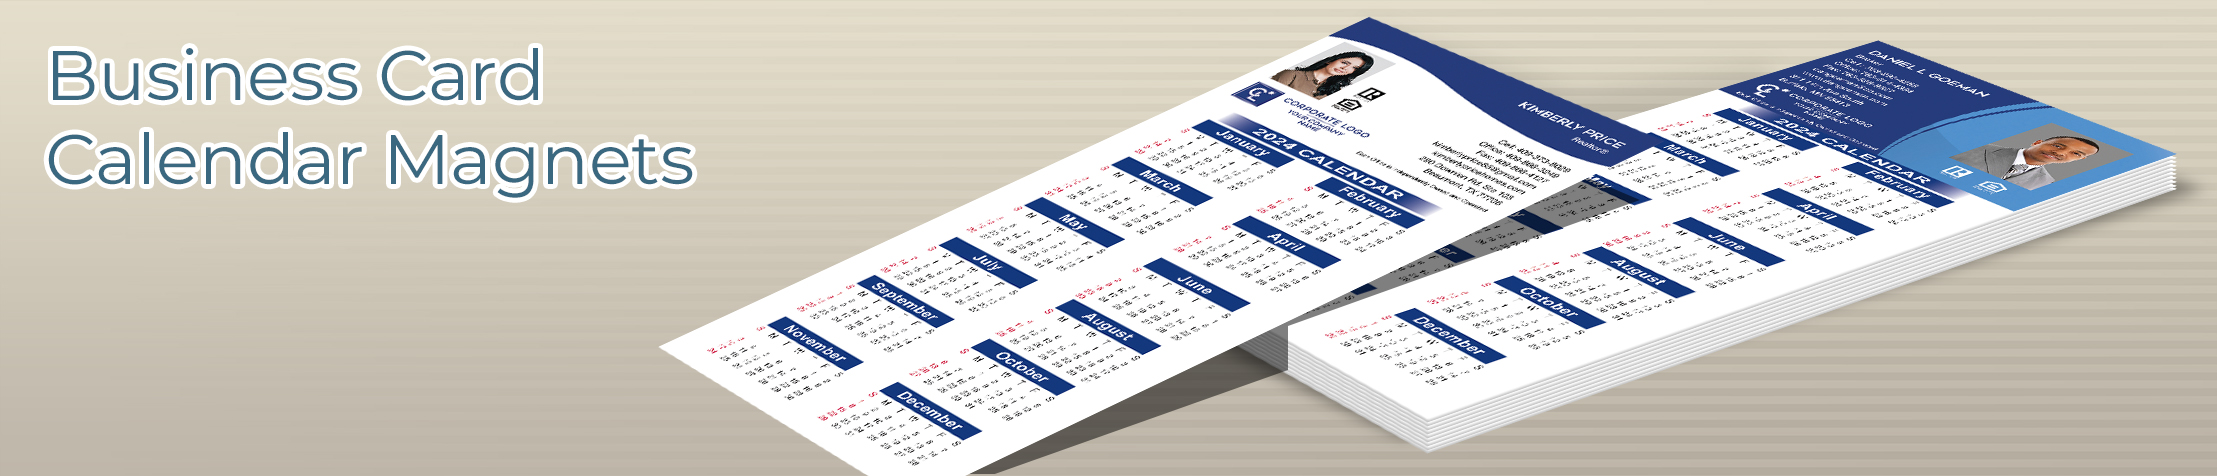 Coldwell Banker Real Estate Business Card Calendar Magnets - Coldwell Banker  personalized marketing materials | BestPrintBuy.com